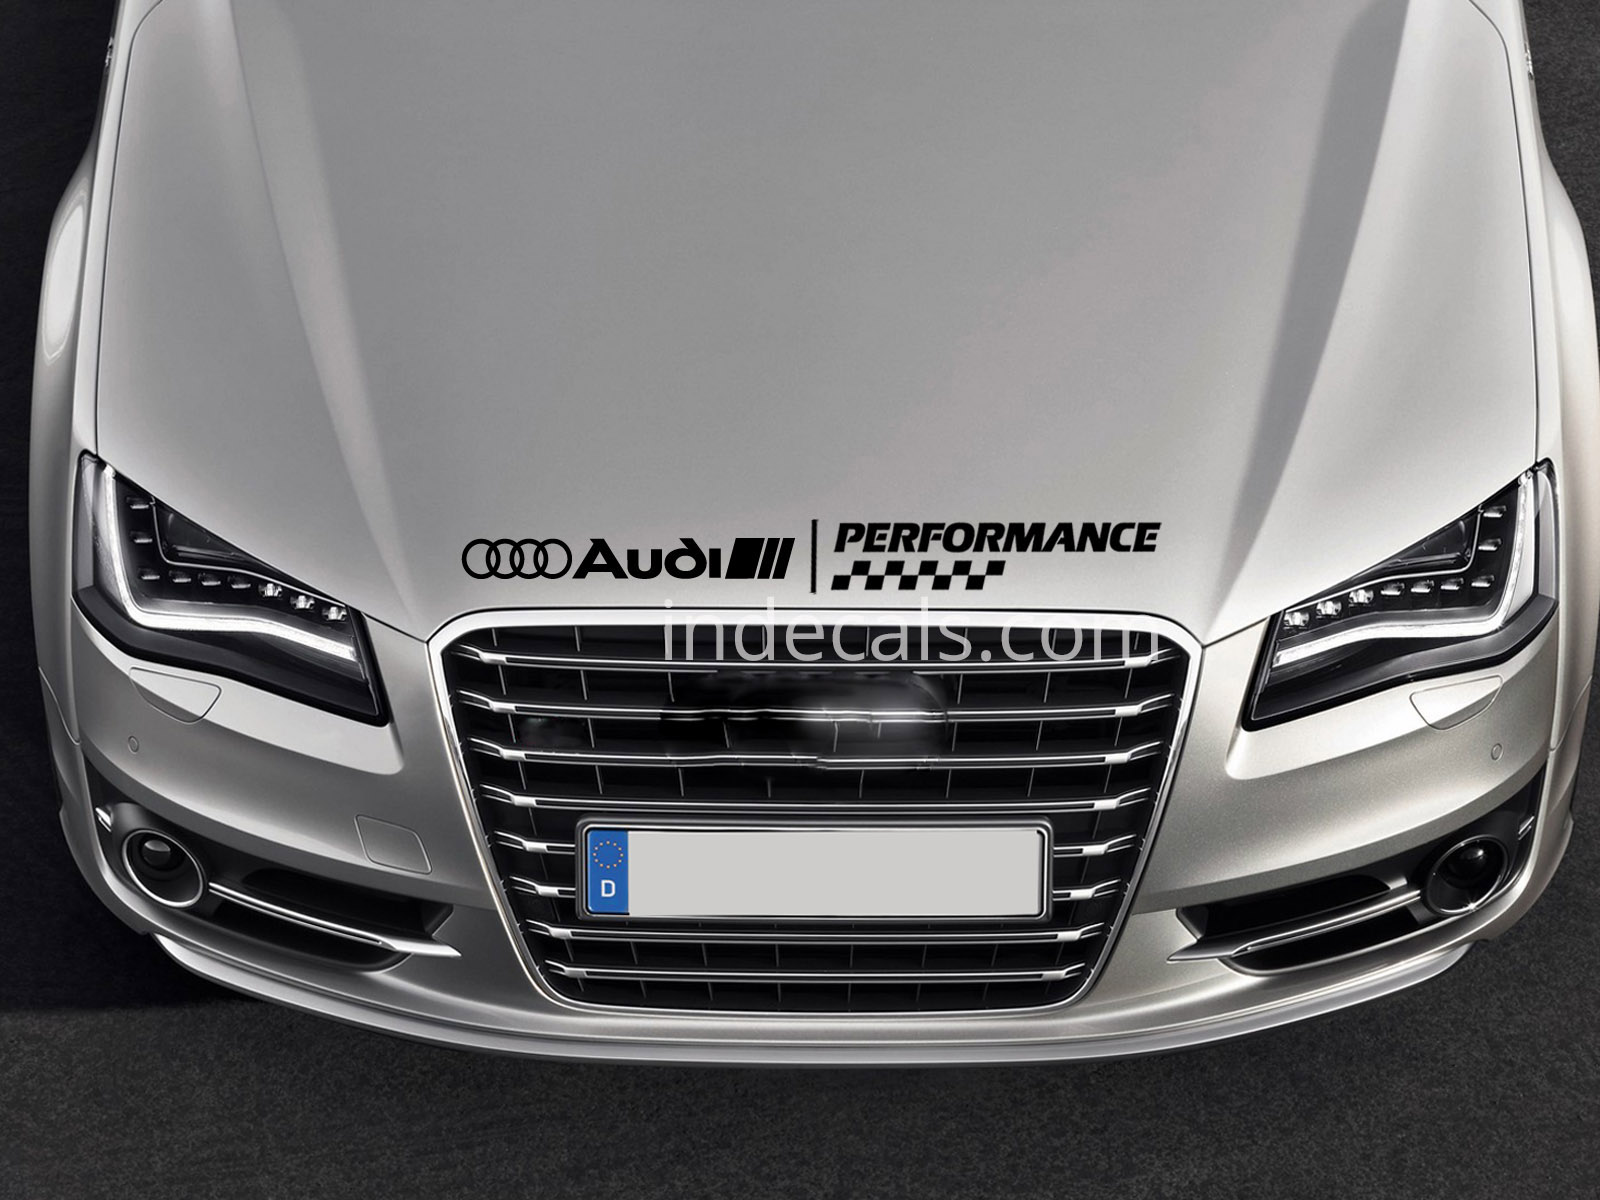 1 x Audi Performance Sticker for Bonnet - Black